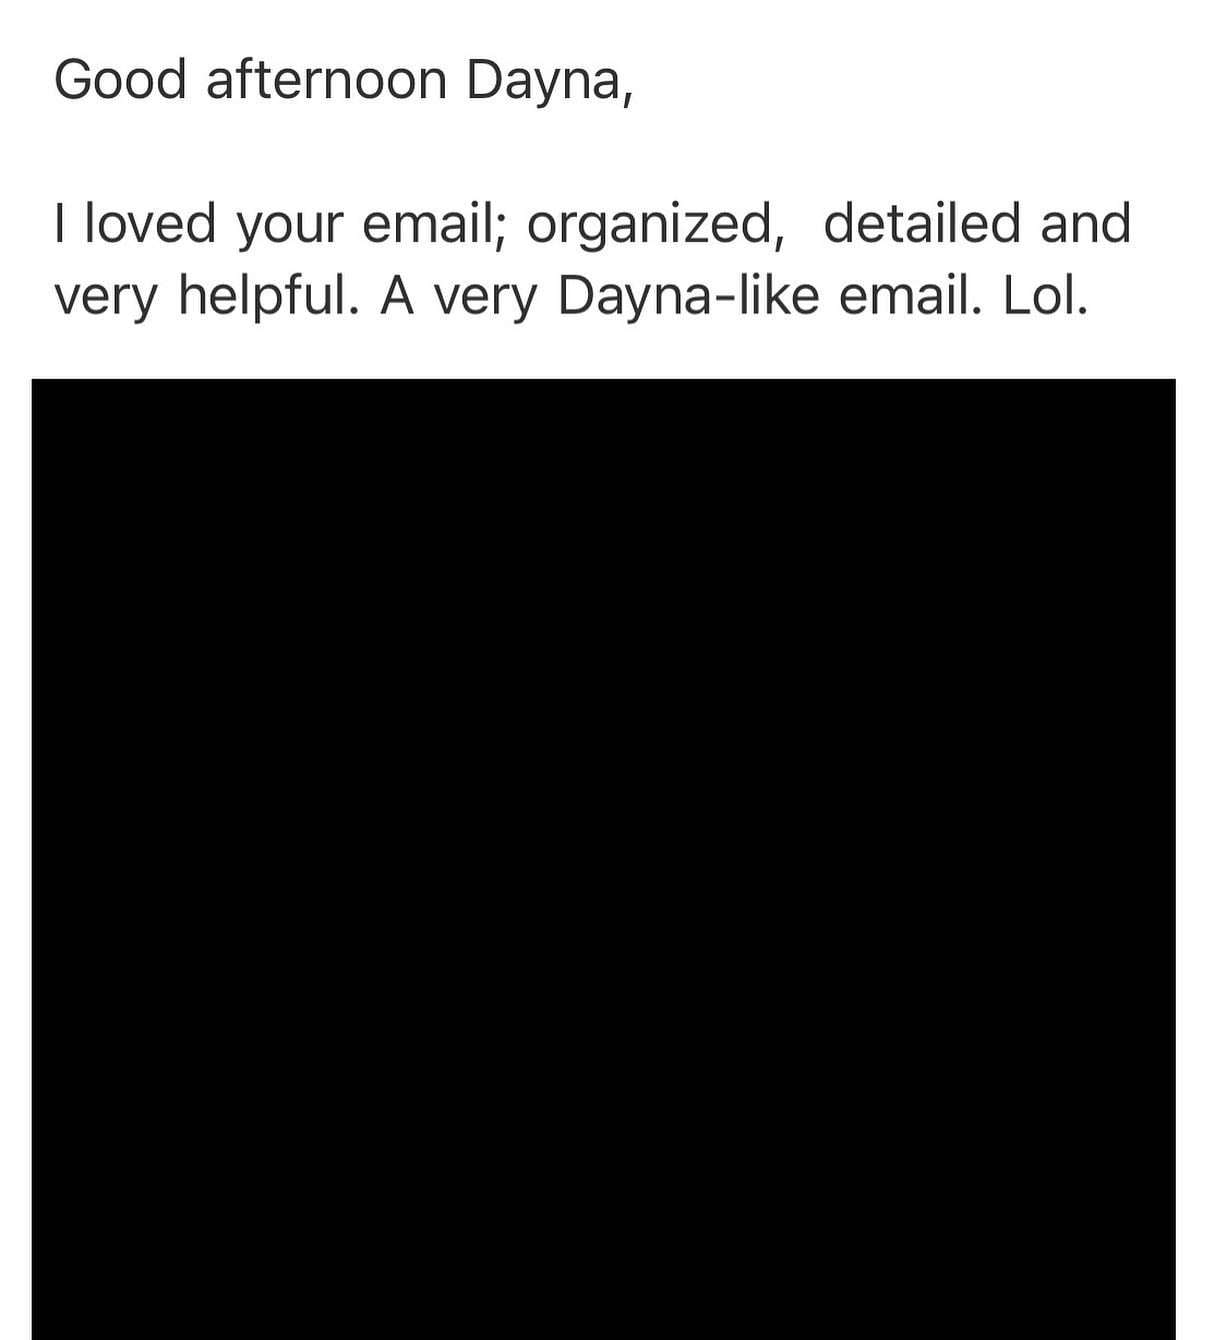 “A Very Dayna-Like Email”